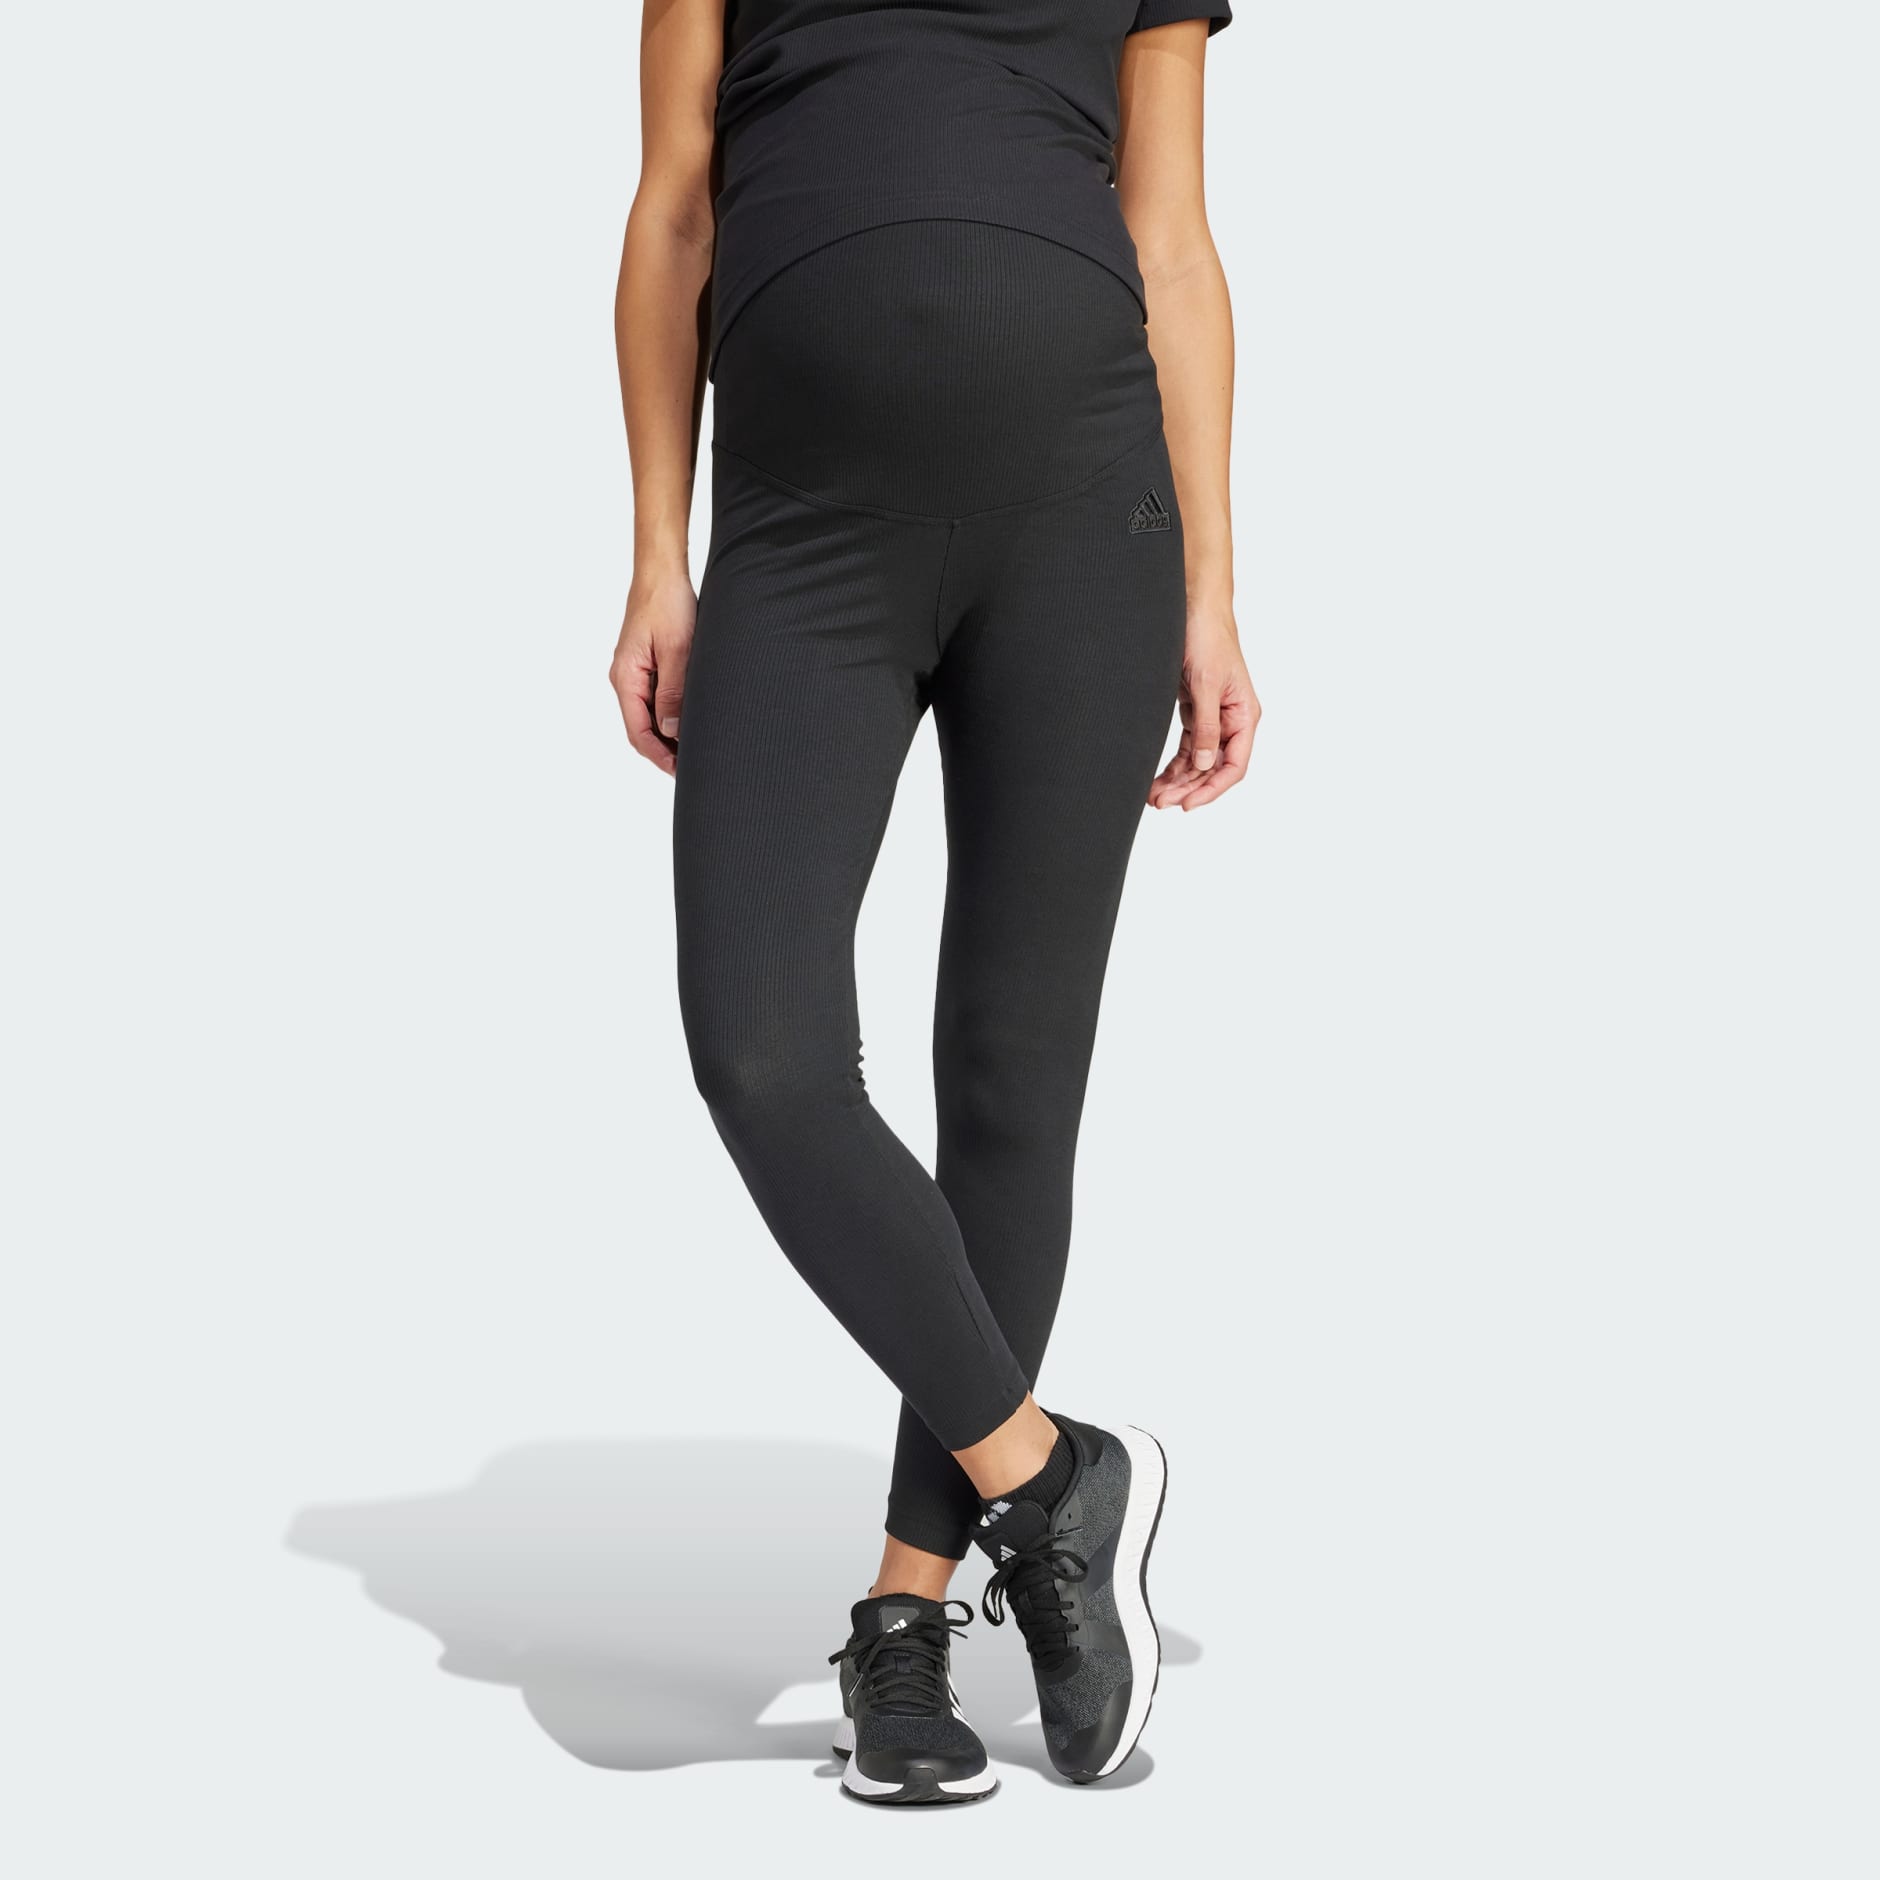 Women's Clothing - adidas by Stella McCartney Maternity Yoga Leggings -  Black